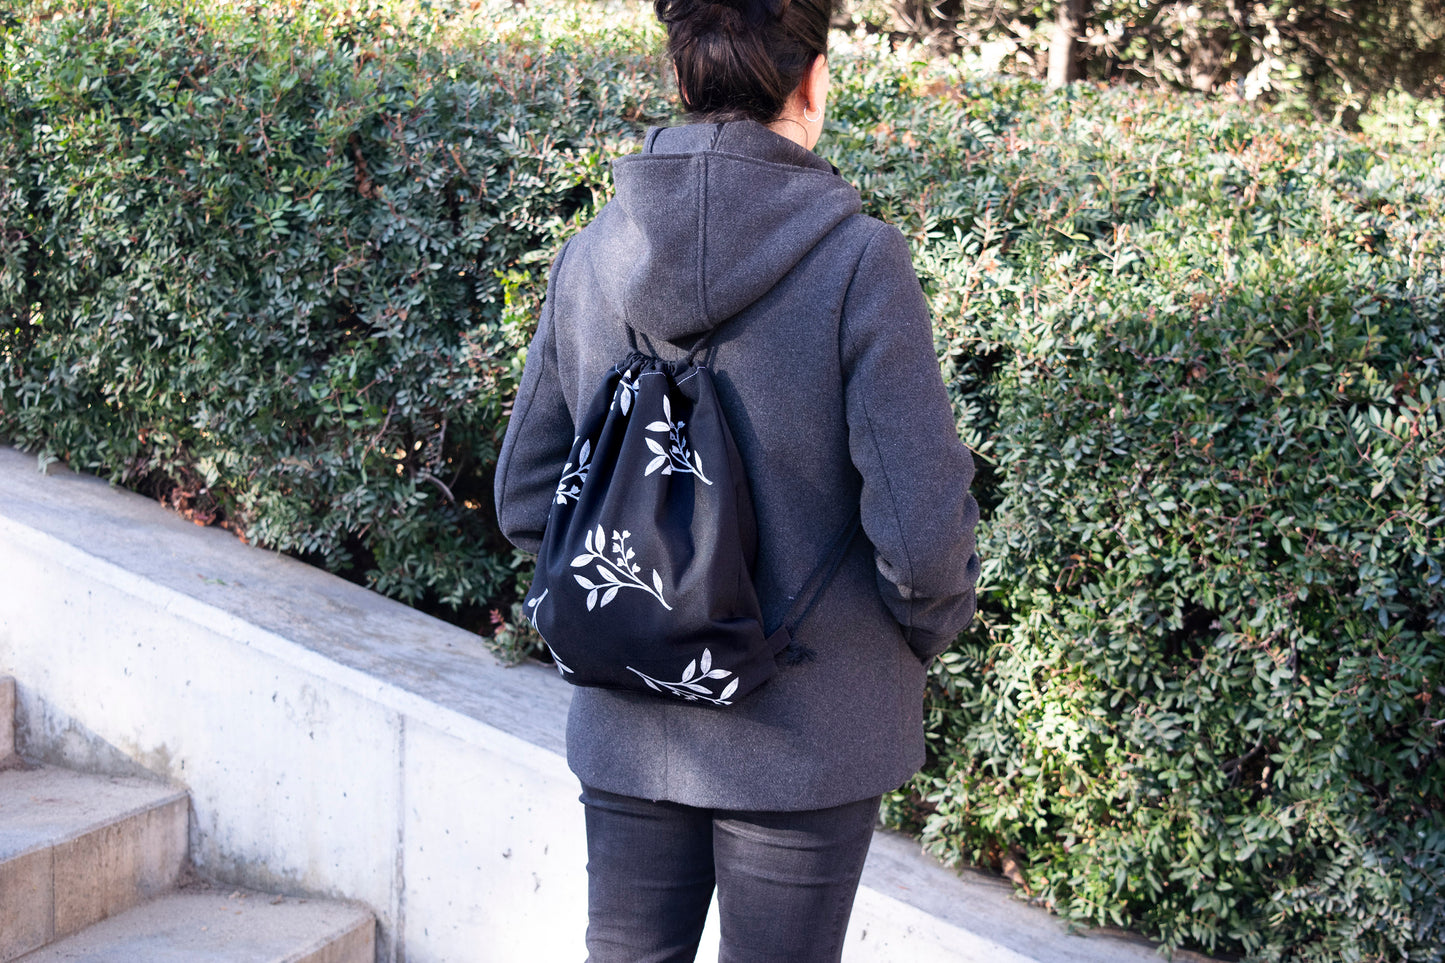 Mochila negra / Black backpack D#2